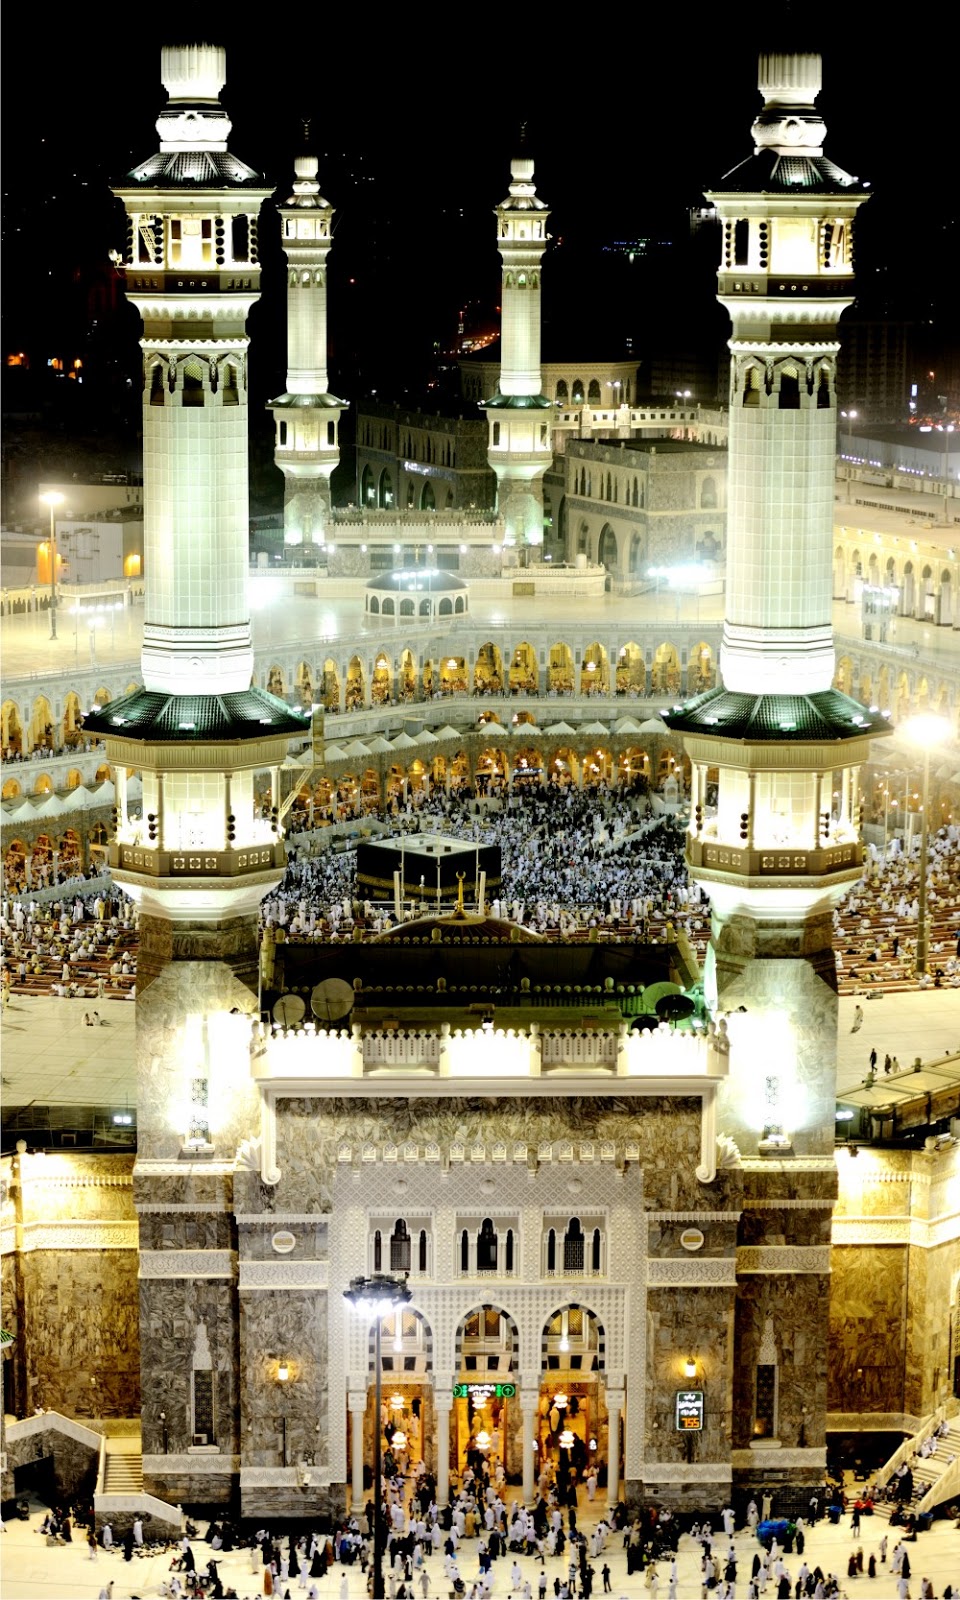 Jual Stiker Dinding: Stiker Dinding Gambar Ka'bah, Mekkah atau Makkah